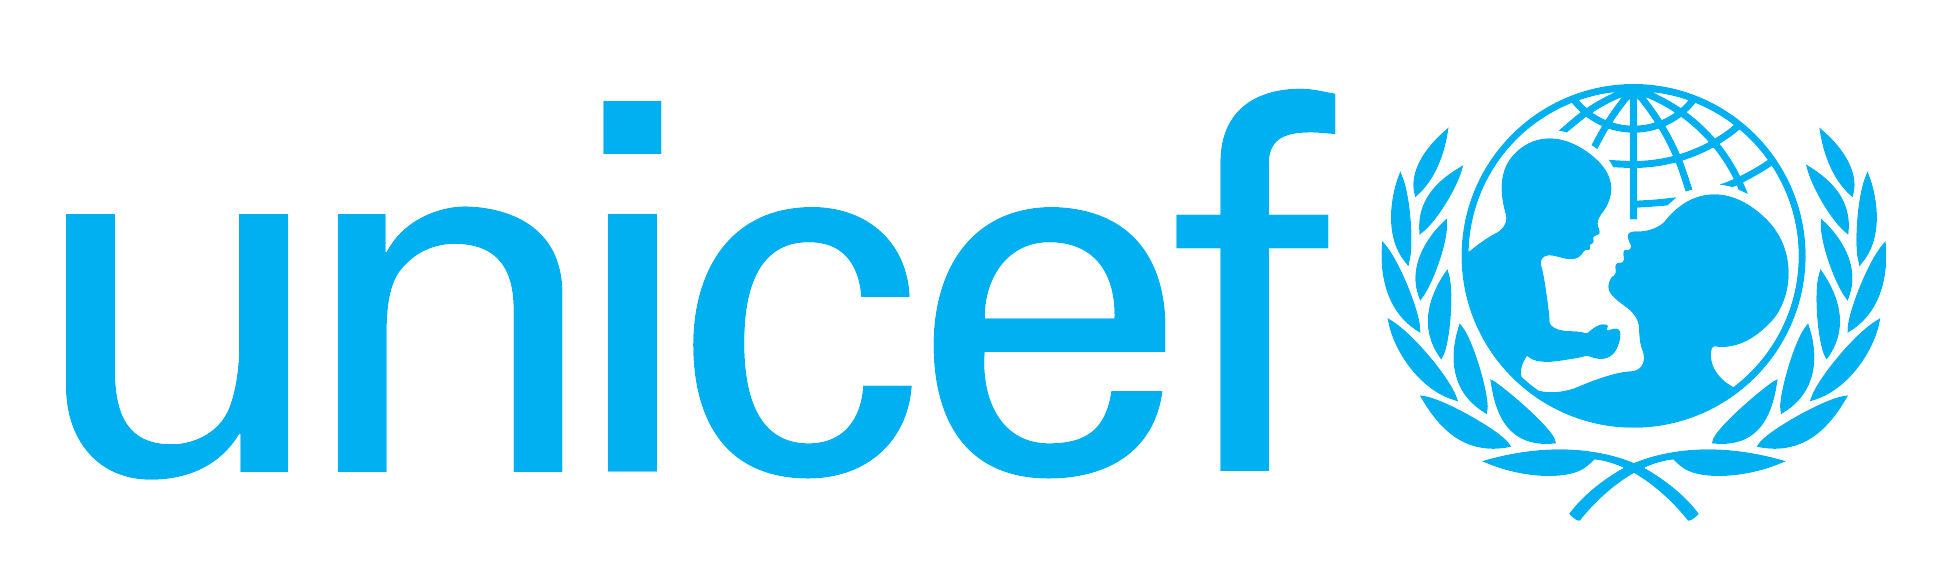 Unicef logo.gif